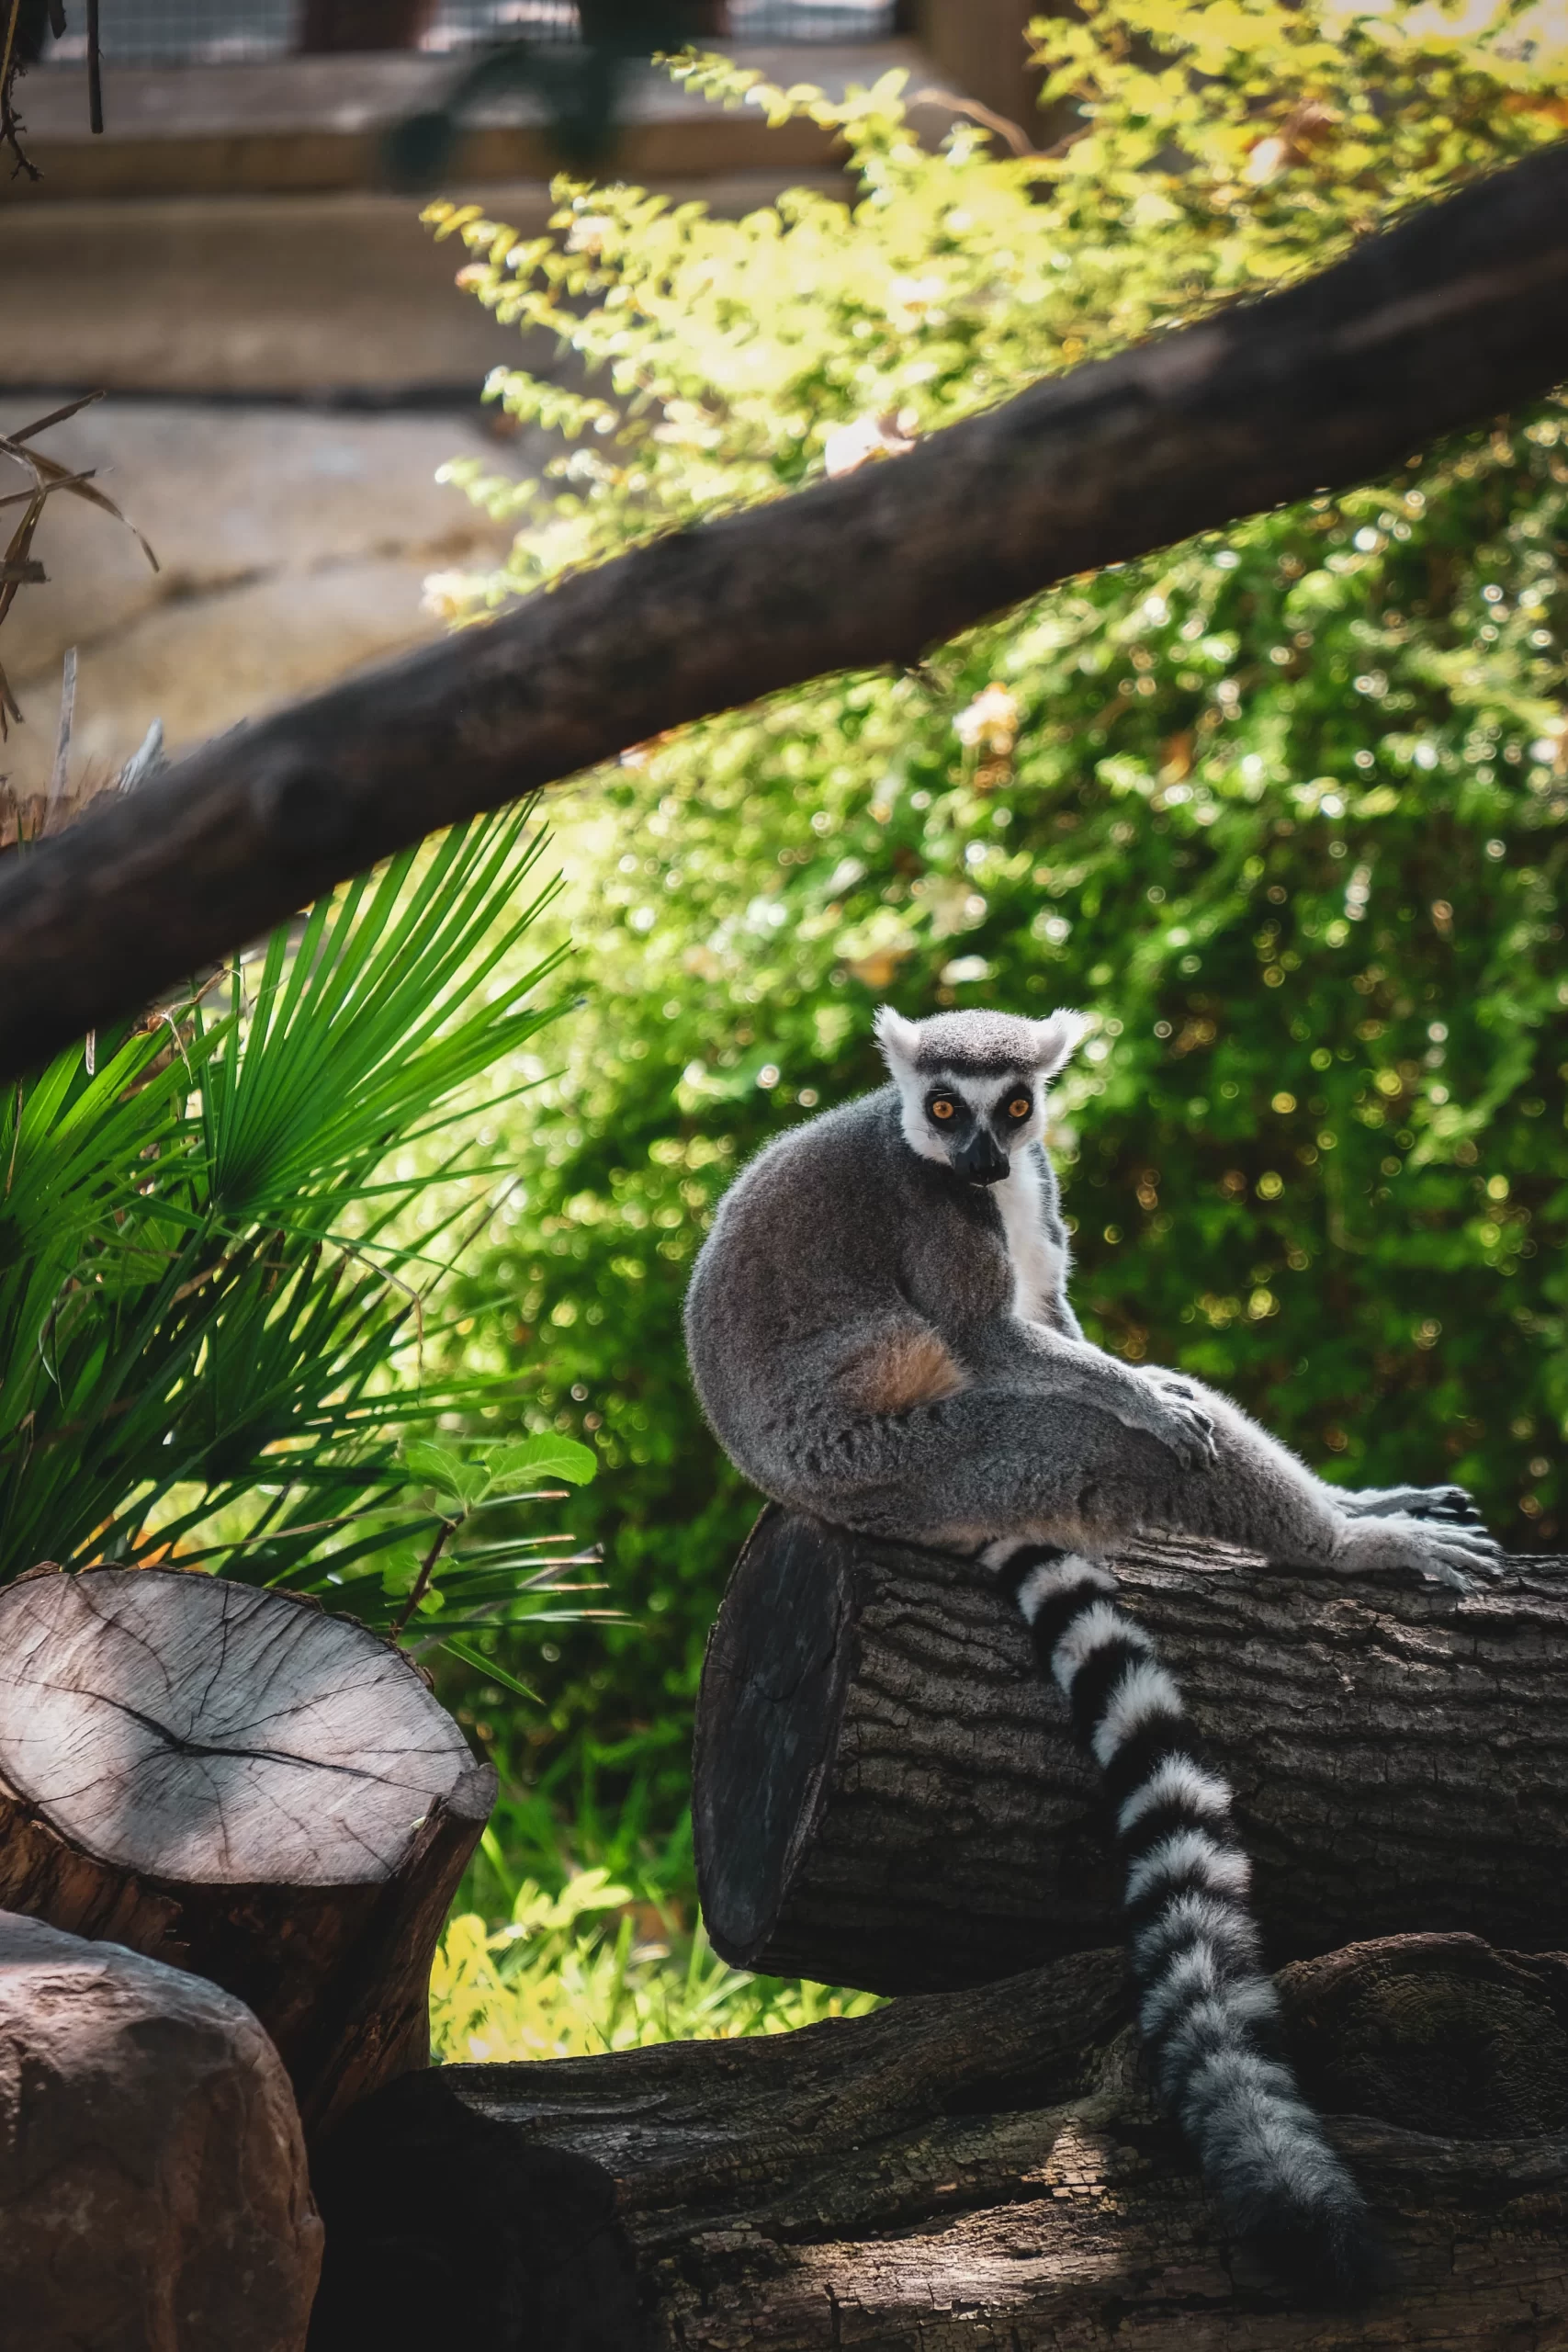 bryan-woolbright-Ring-tailed lemur-unsplash from Dallas TX zoo